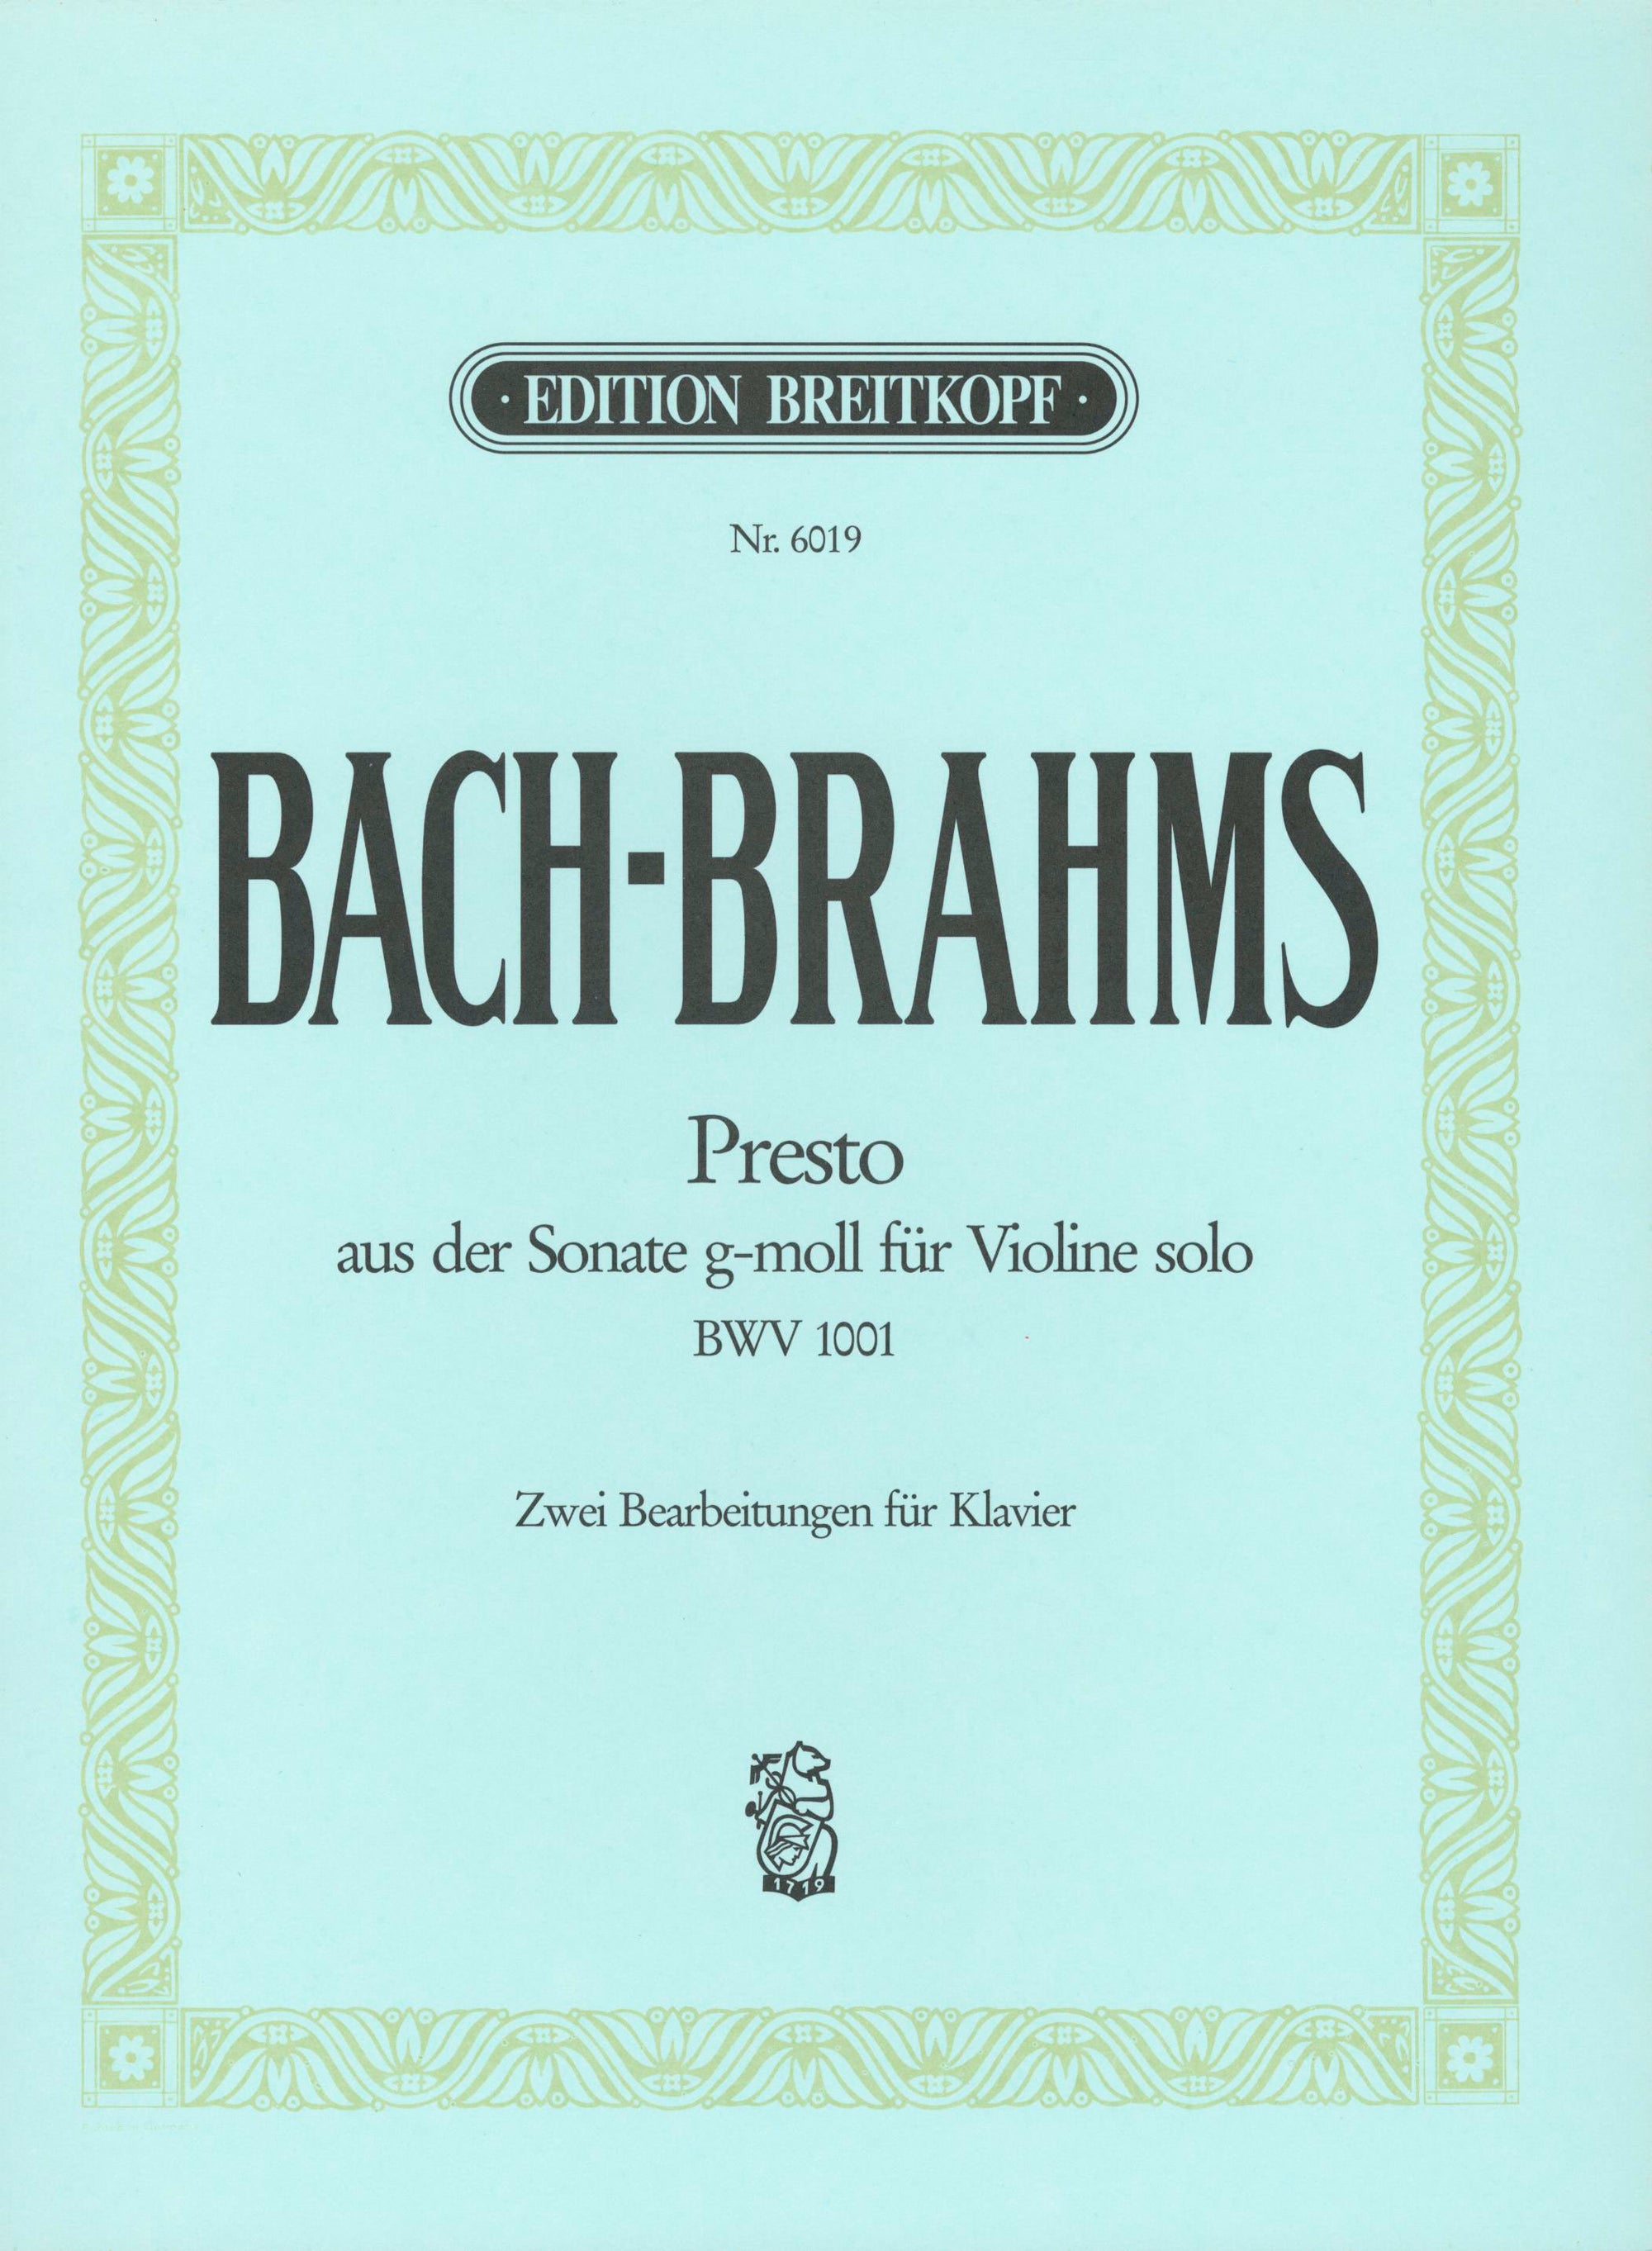 Bach-Brahms: Presto after the Violin Sonata in G Minor, BWV 1001